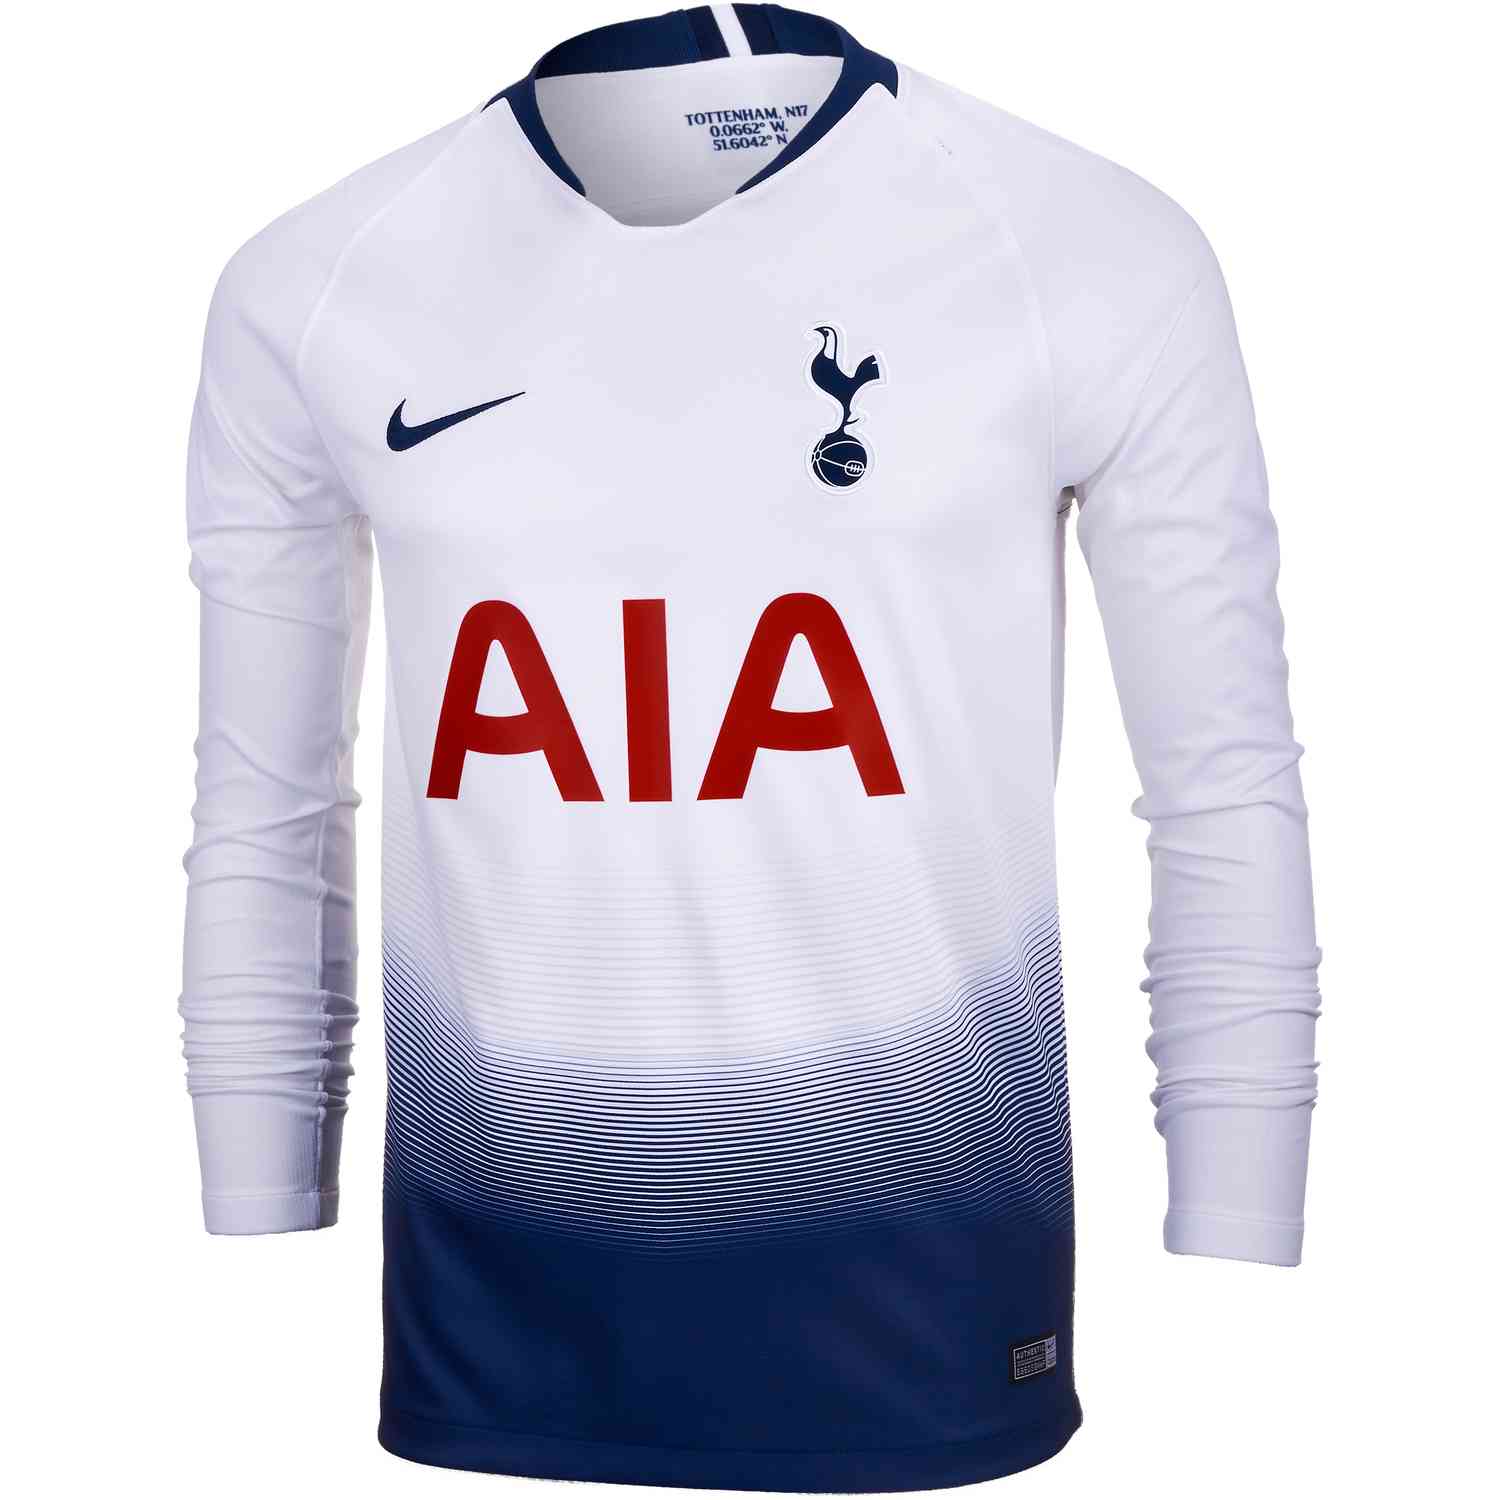 Nike+Tottenham+Hotspur+Spurs+2018%2F19+Home+Soccer+Kit+Jersey+919005-101+Sz+L  for sale online